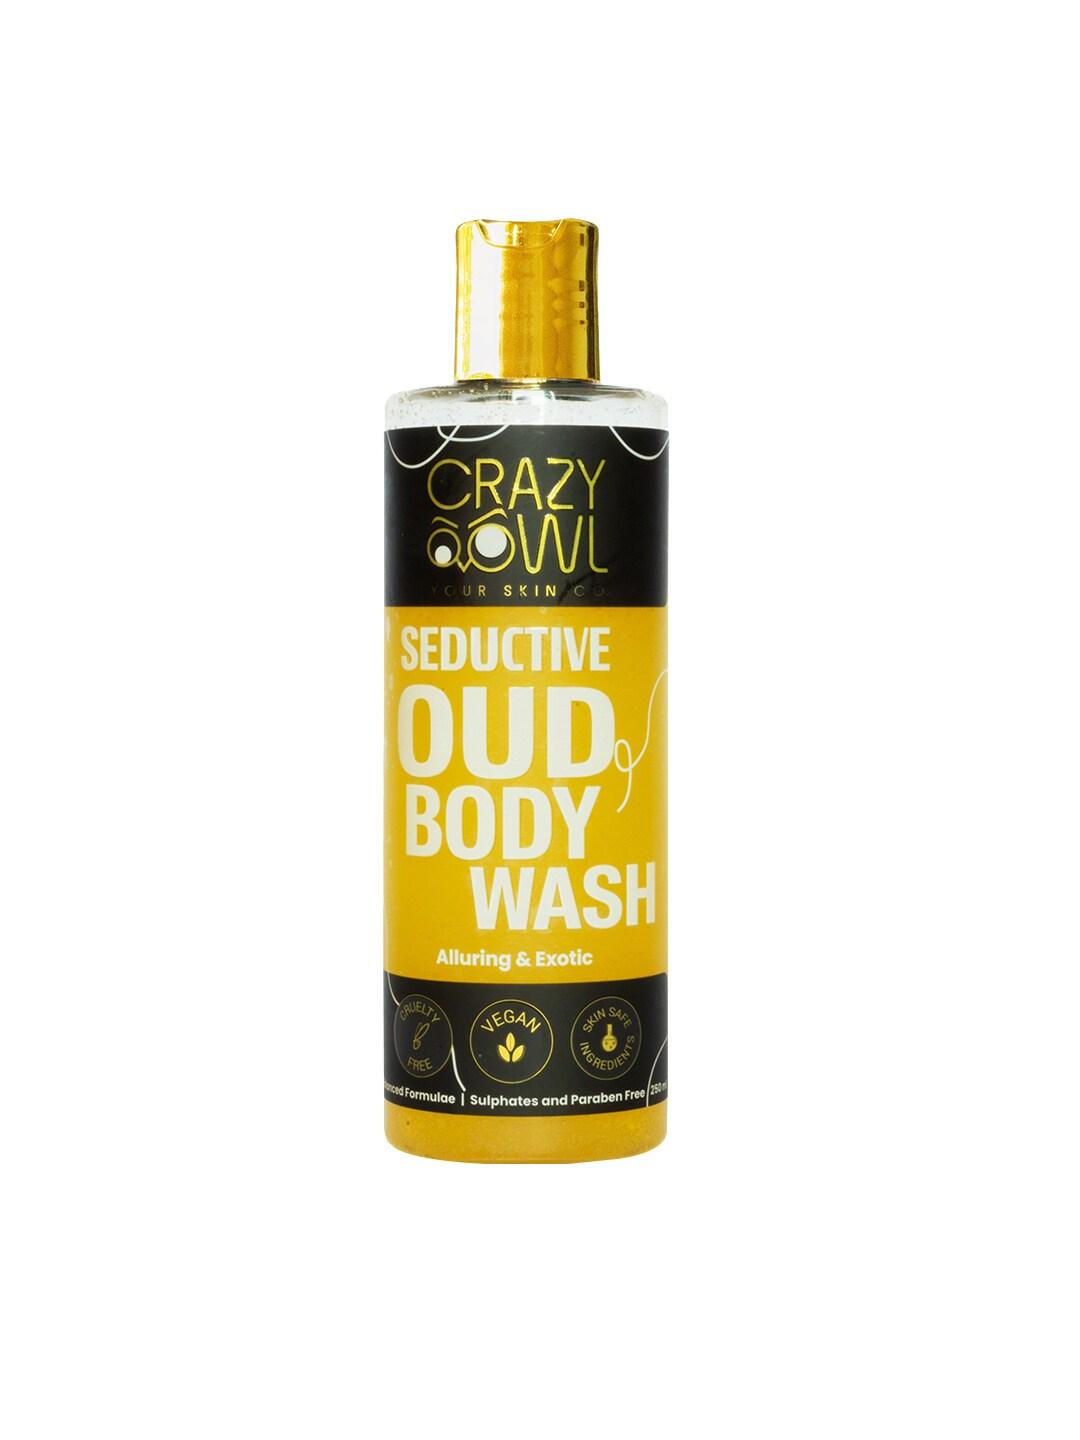 CRAZY OWL Seductive Oud Body Wash -250ml